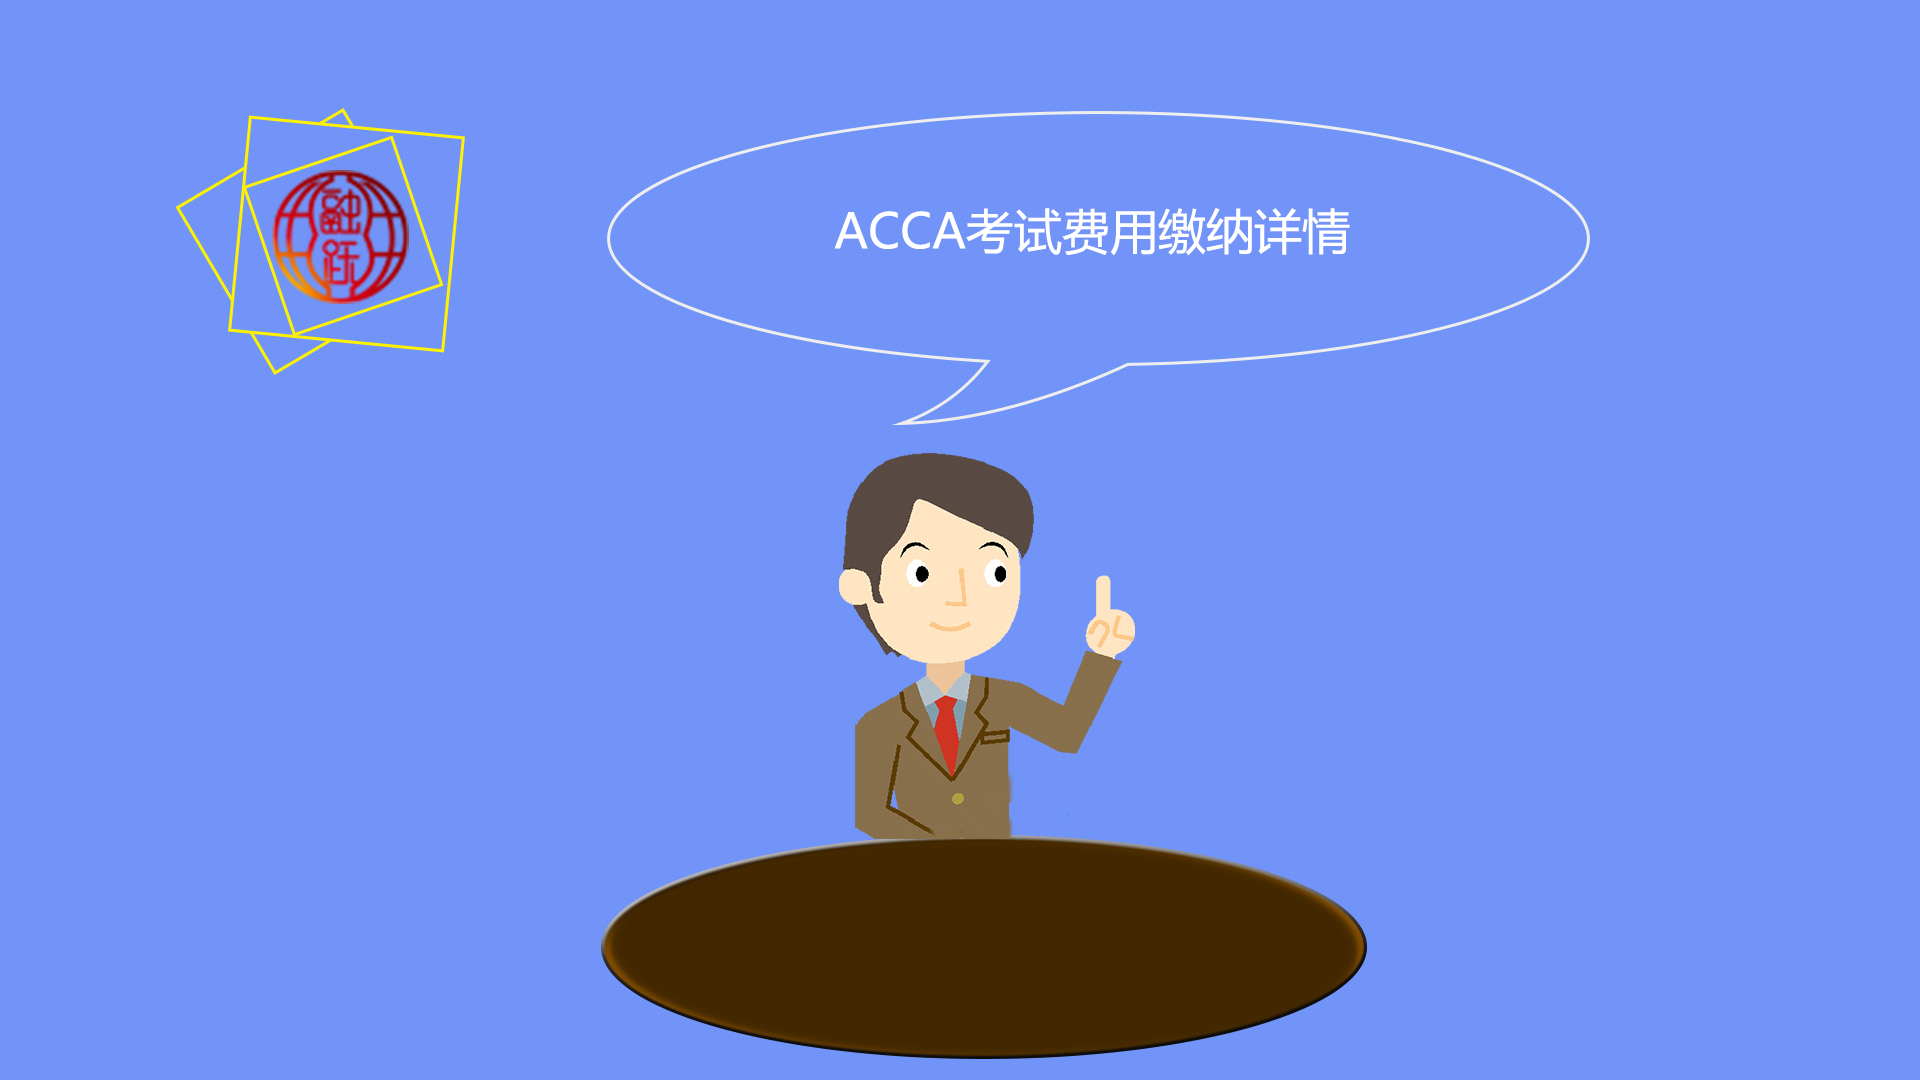 ACCA光考试费用都一万多？2020年如果报的话，ACCA考下来要多少钱？